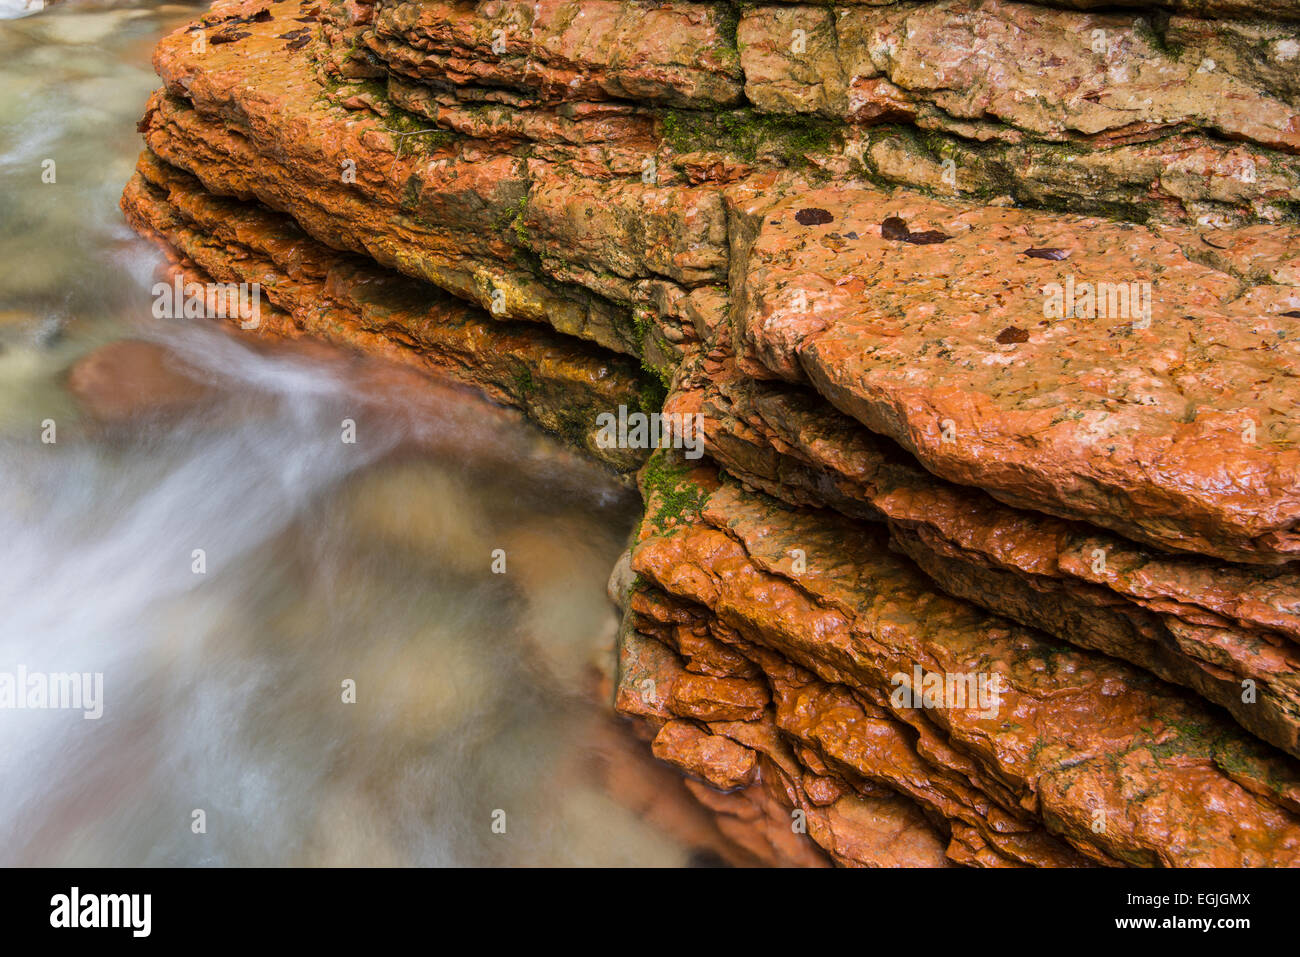 Detail of Taugl stream, Tauglbach or Taugl River, Taugl River Gorge, Tennengau region, Salzburg State, Austria Stock Photo